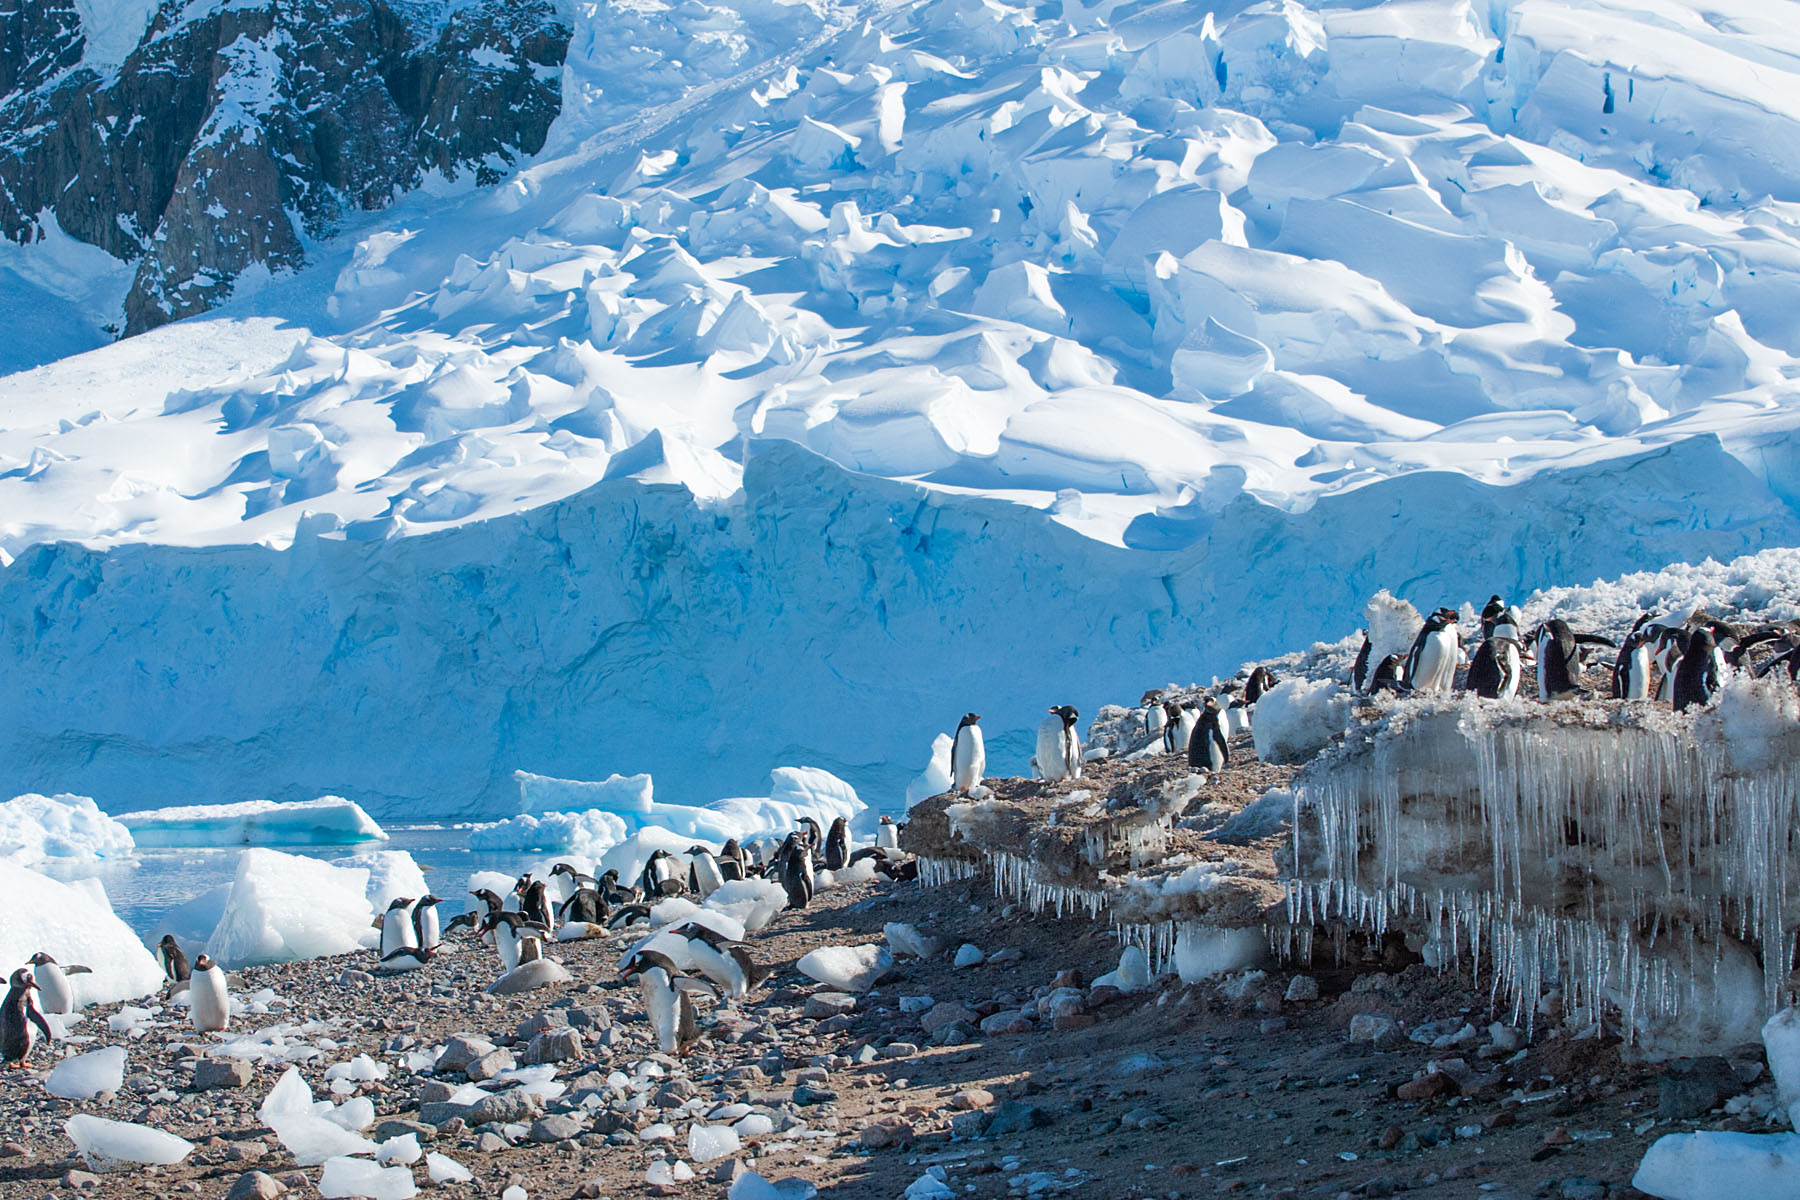 Gentoos at Neko Harbor on the Antarctic continent.  Click for next photo.